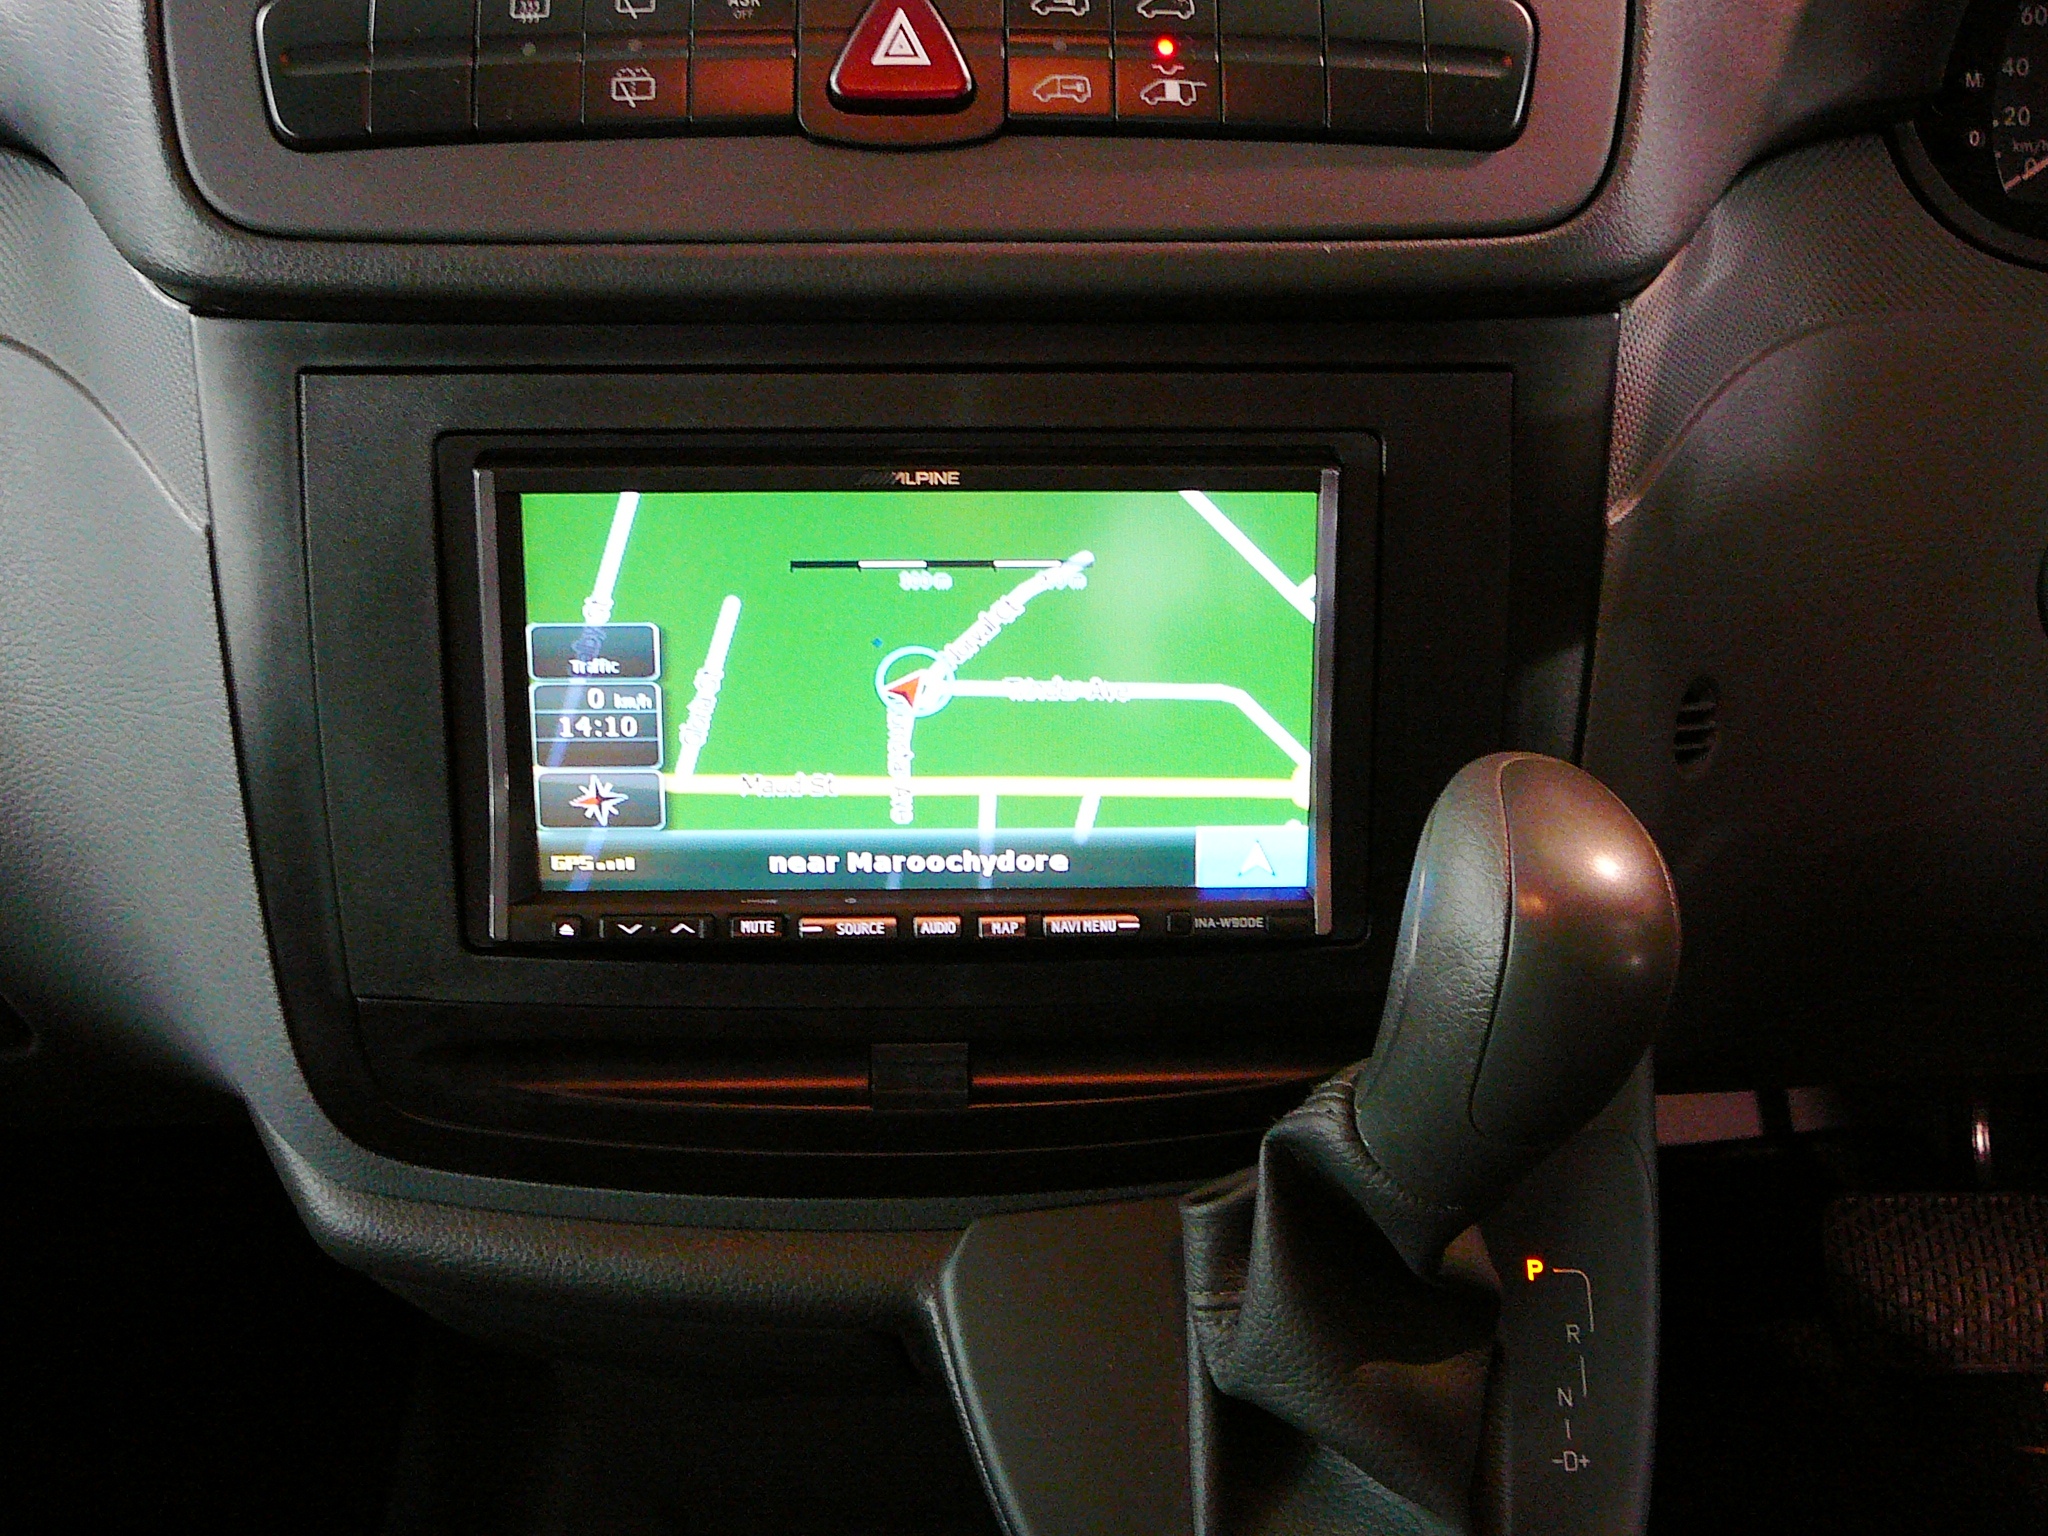 Mercedes Vito 2010, Alpine GPS Navigation systems and reverse camera